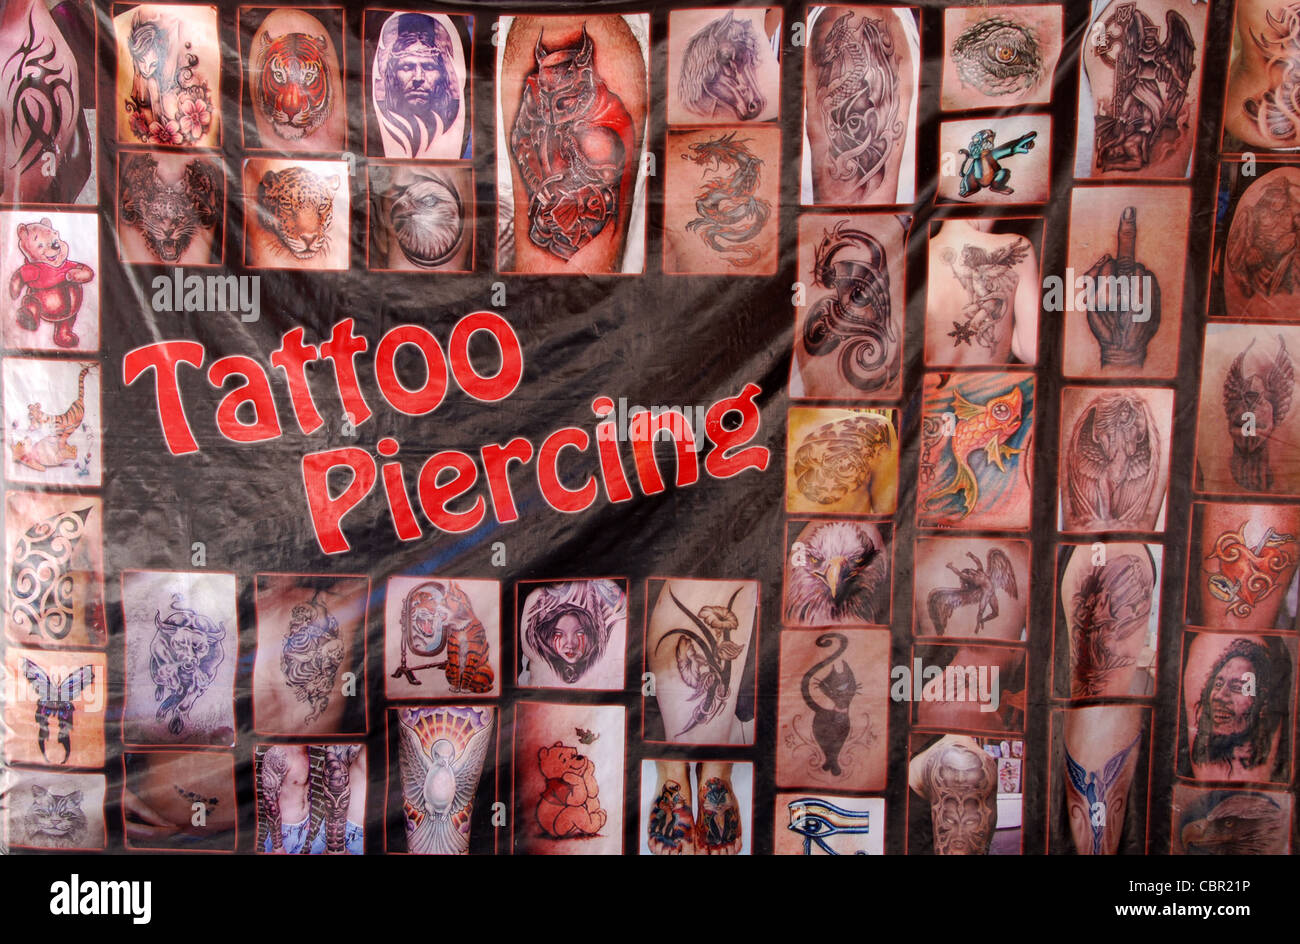 Tatuaggio piercing parlor Icmeler turchia europa Foto Stock